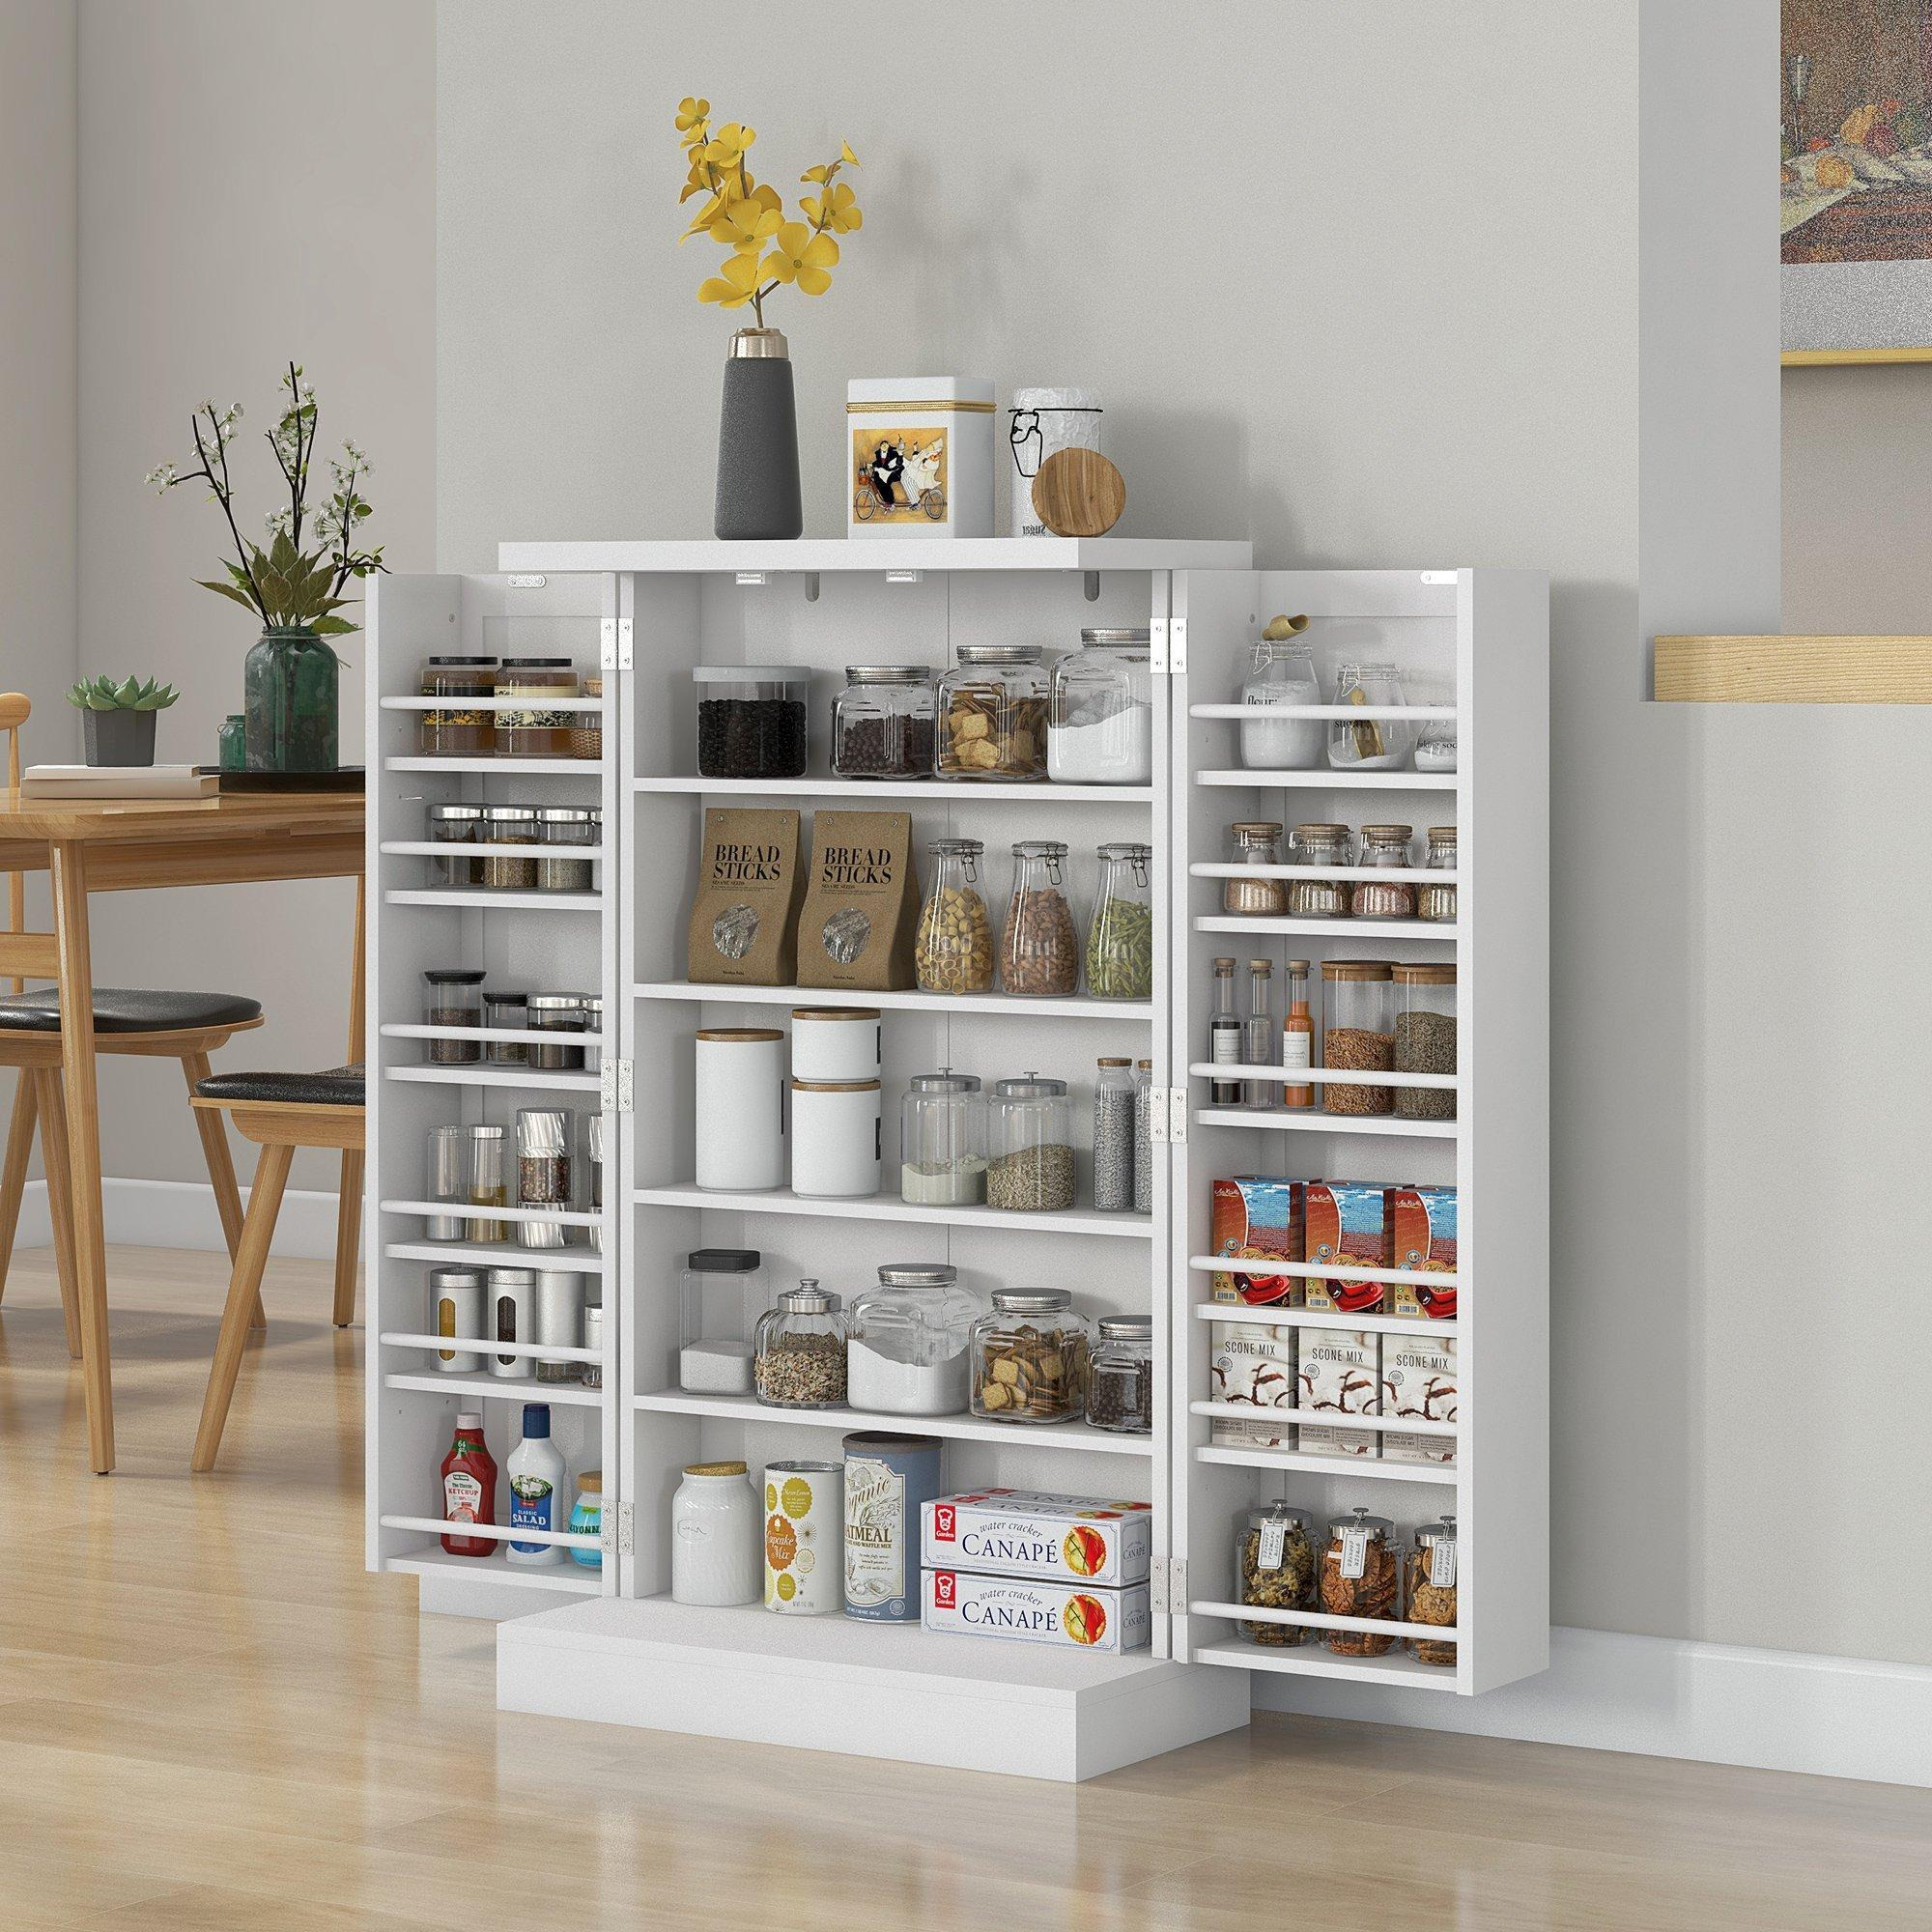 Freestanding Kitchen Storage Cabinet with Spice Racks - image 1